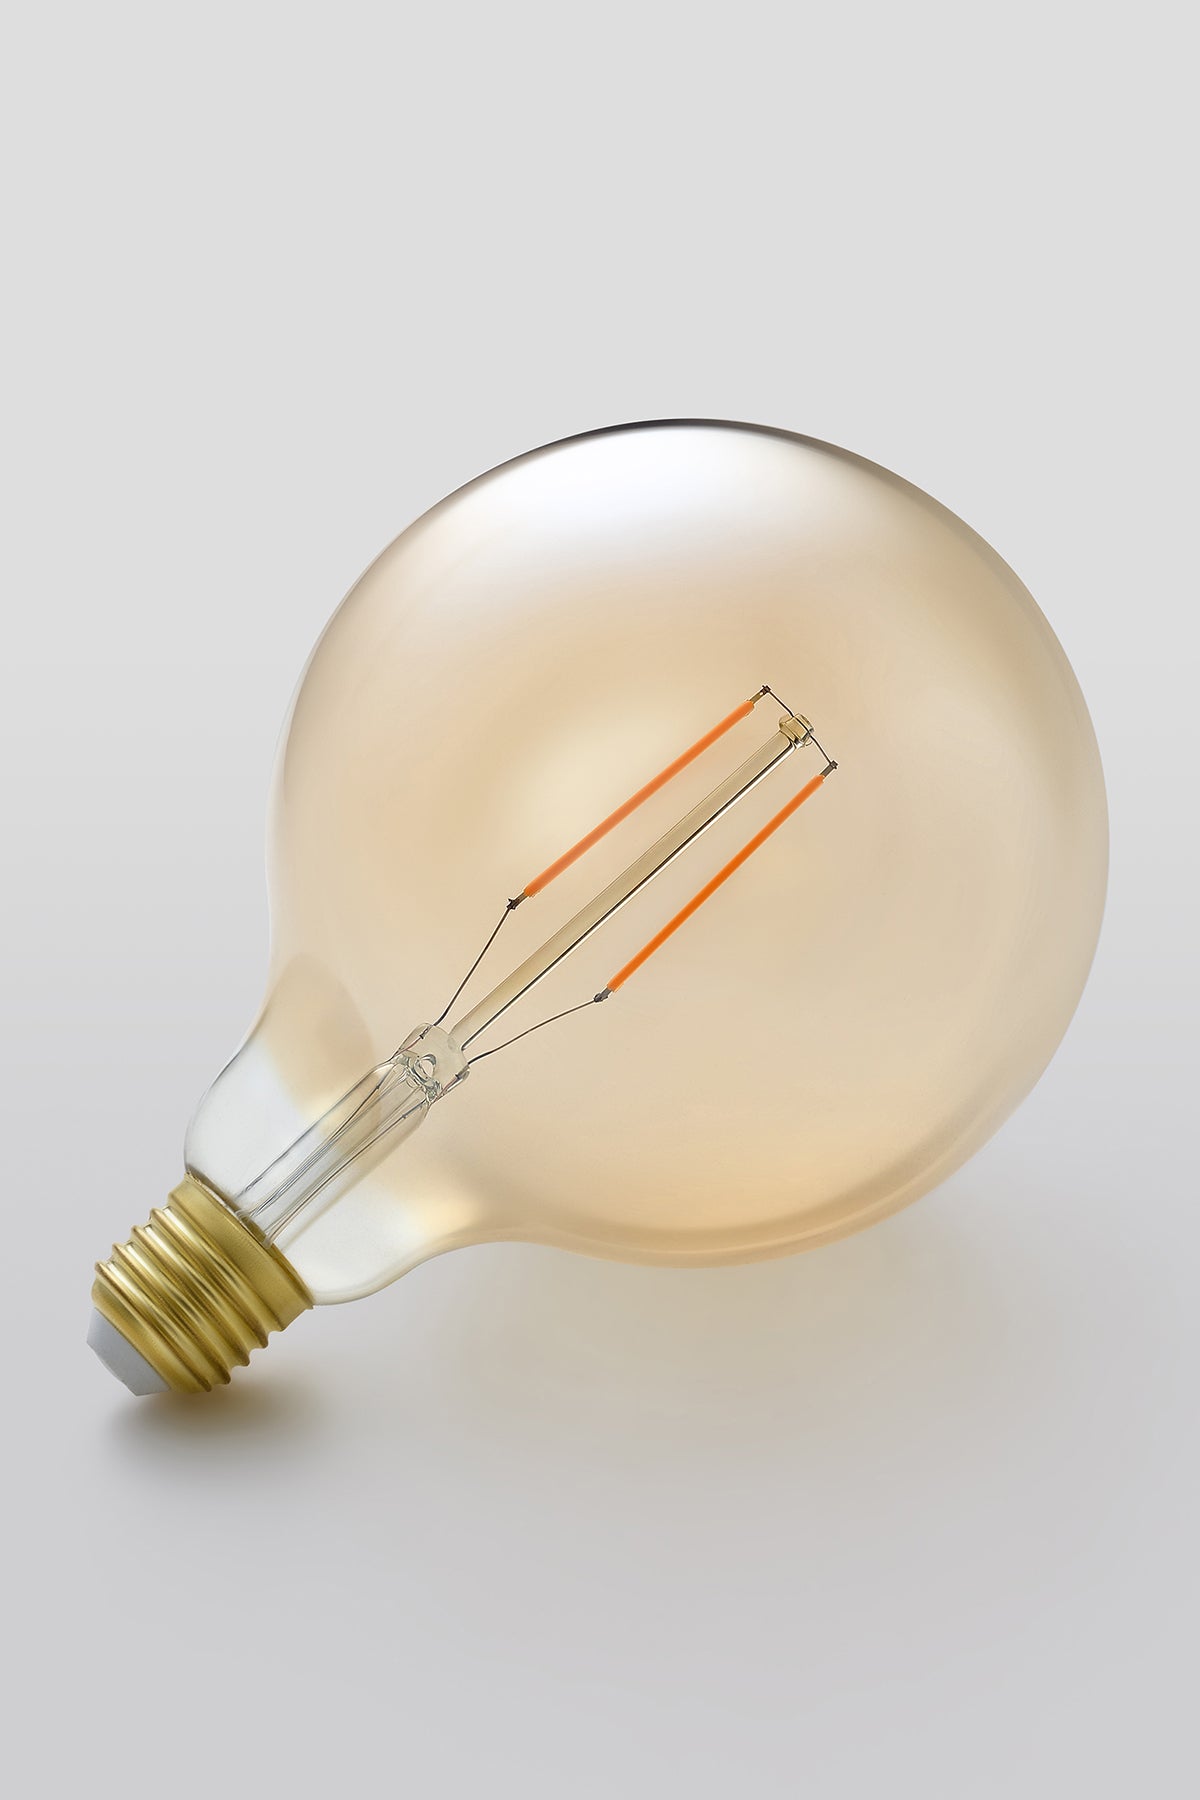 Modern G40 LED light bulb with warm vintage Edison style glow